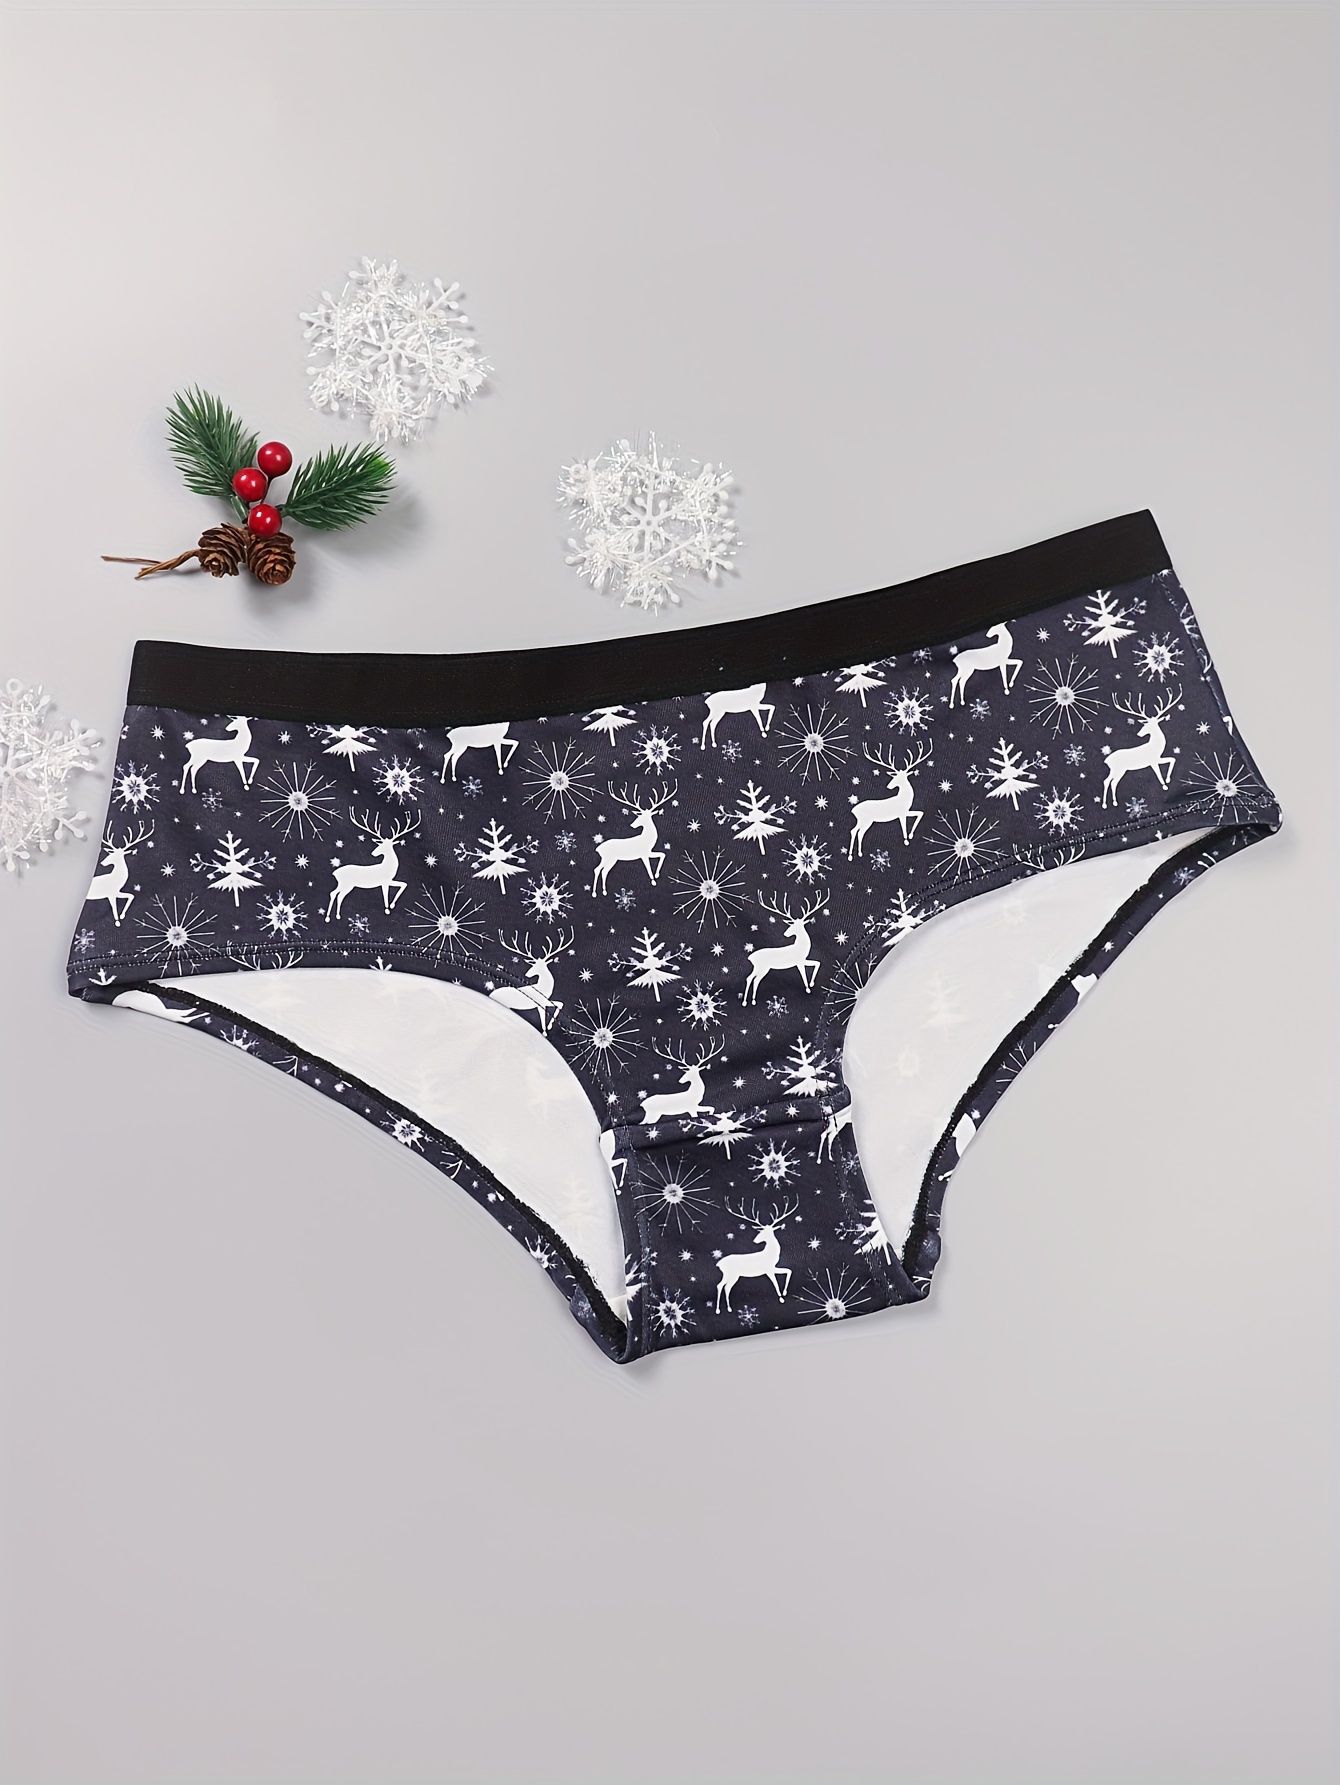 Christmas Underwear, Women's Briefs, Gnome, Black and Red, Best